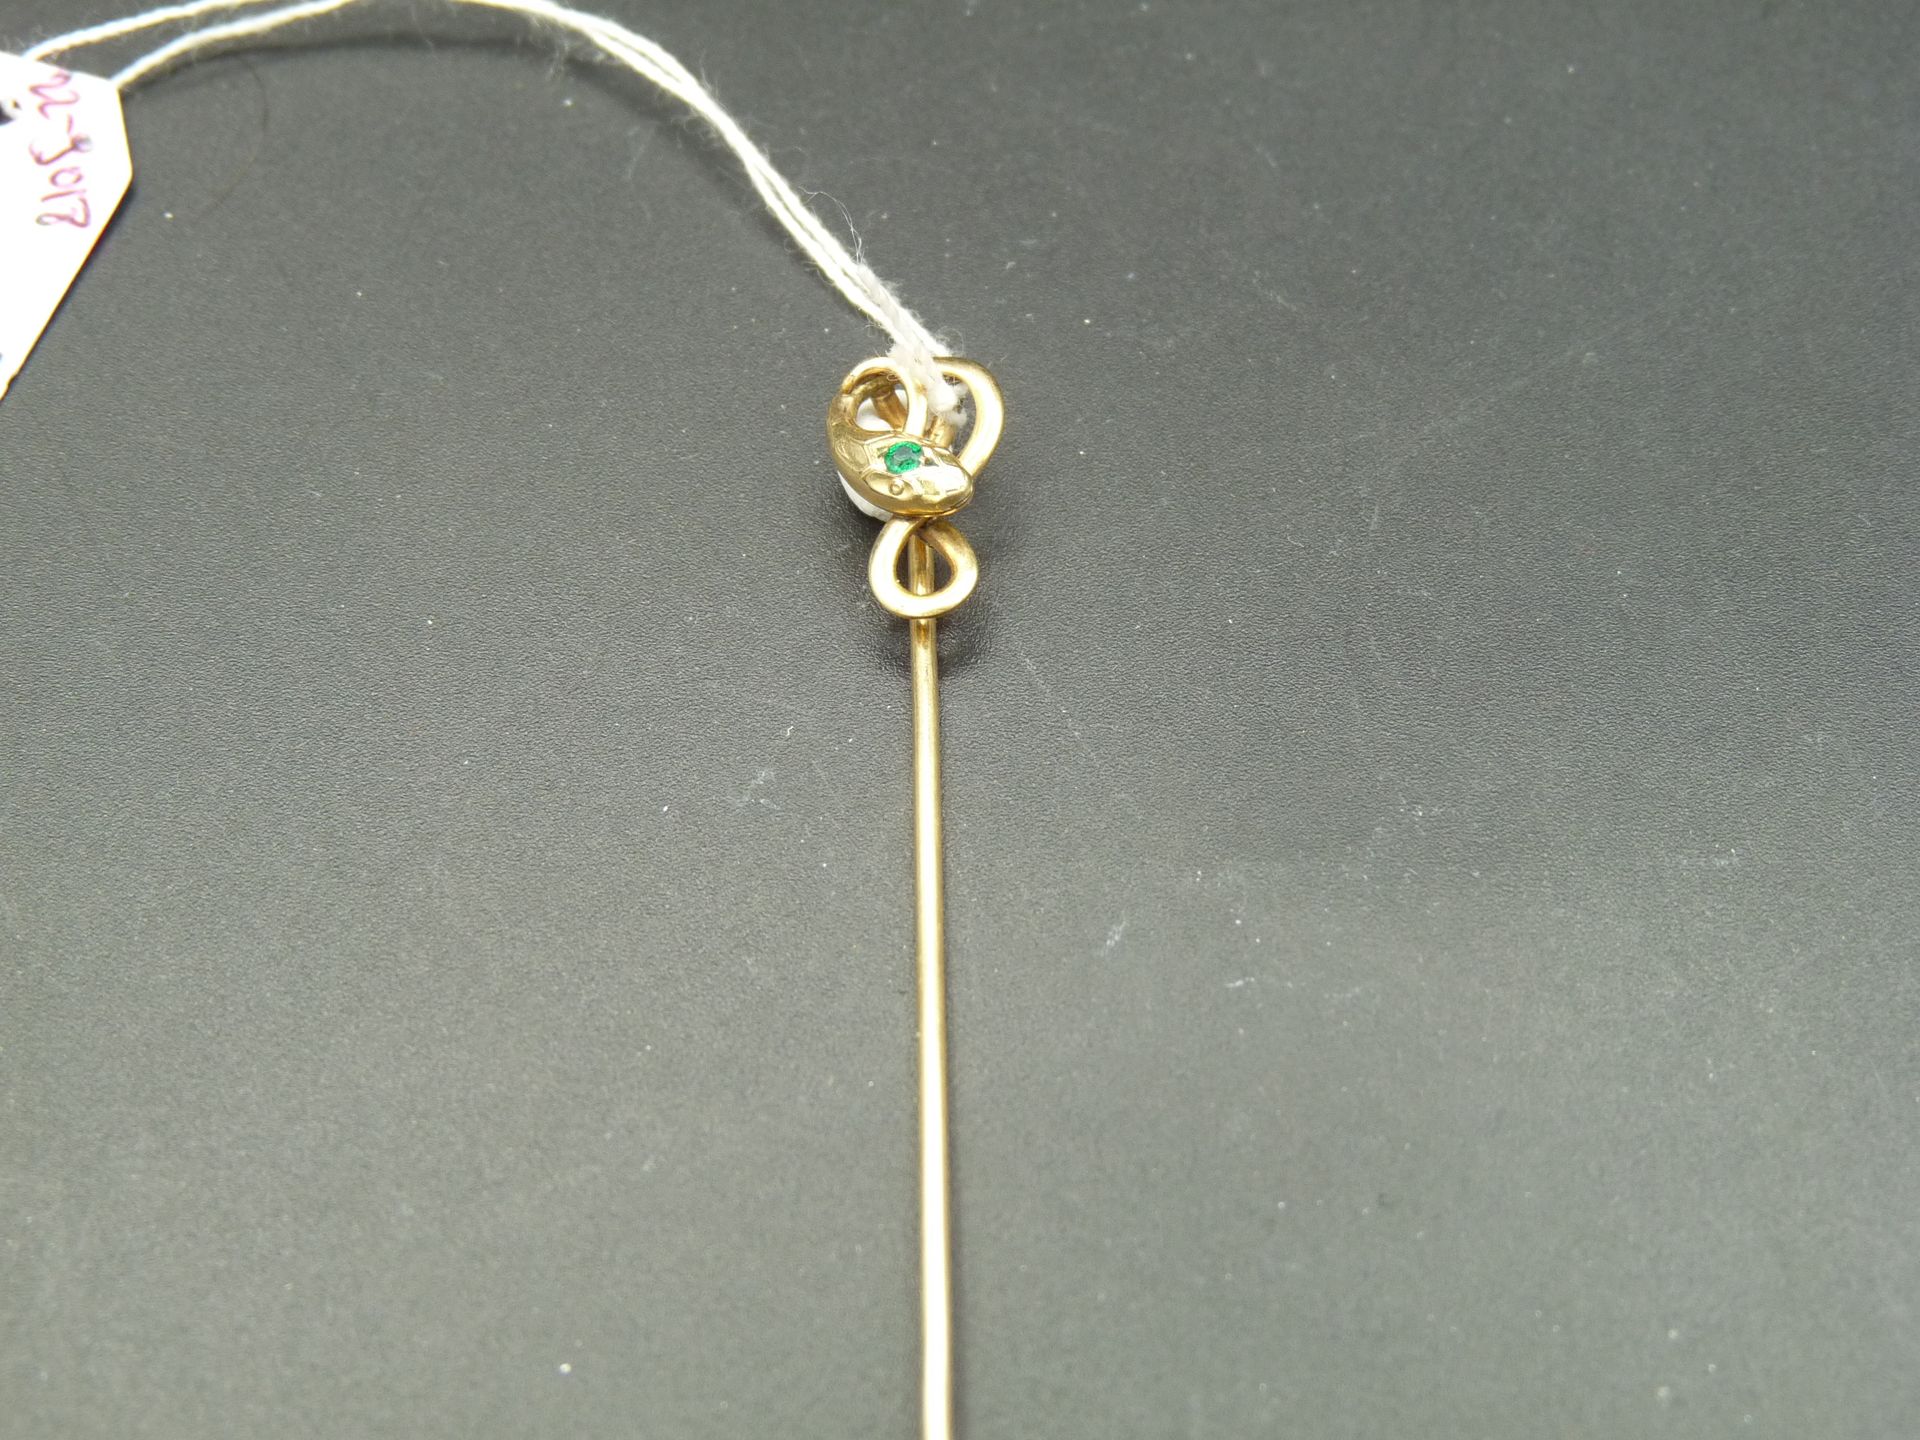 Null 镀金金属领带夹 (FIX) 上有一条蛇，蛇头上镶有一颗绿色宝石。